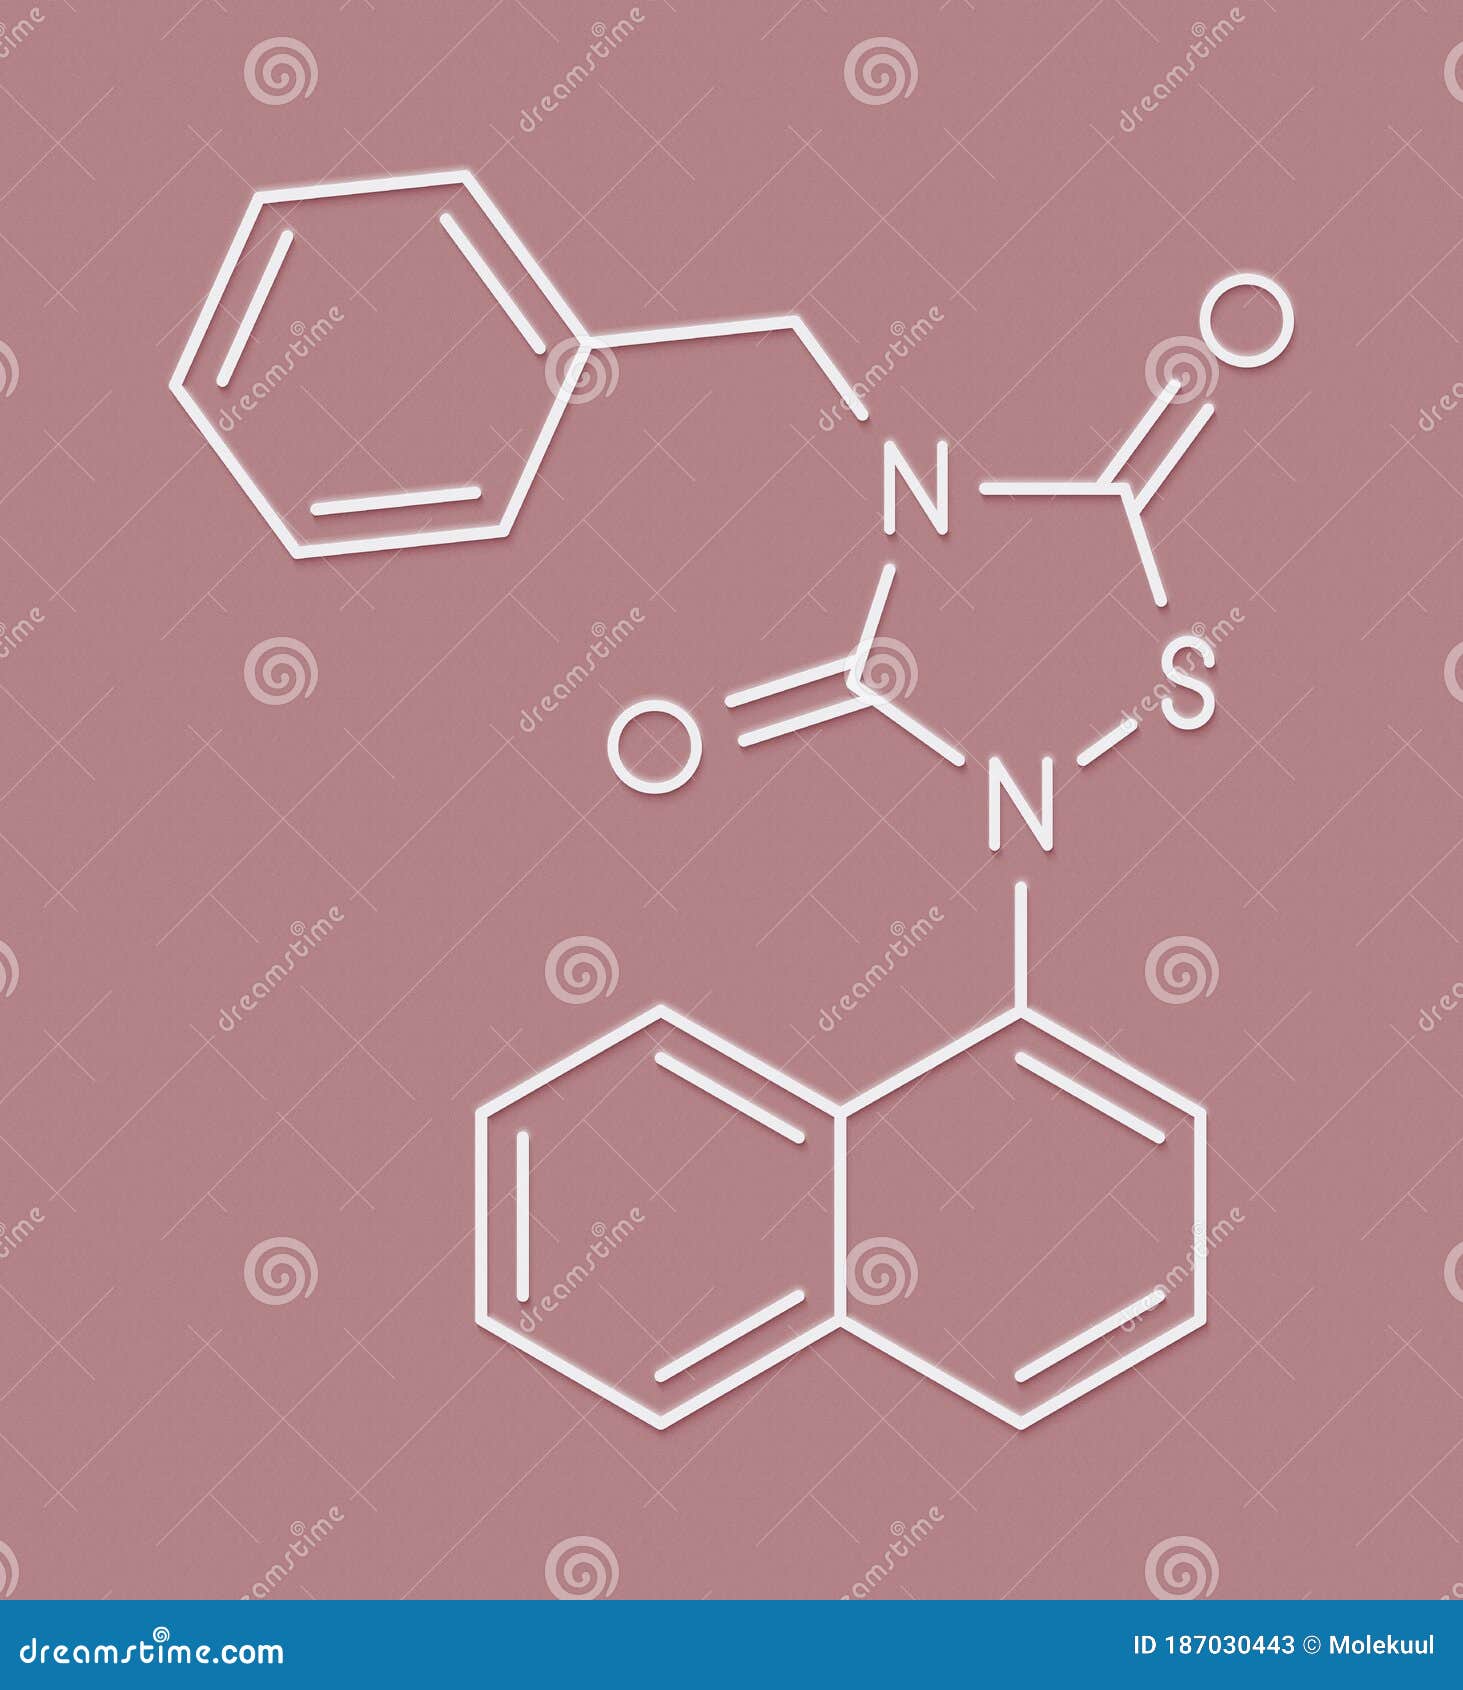 tideglusib drug molecule gsk-3 inhibitor. skeletal formula.